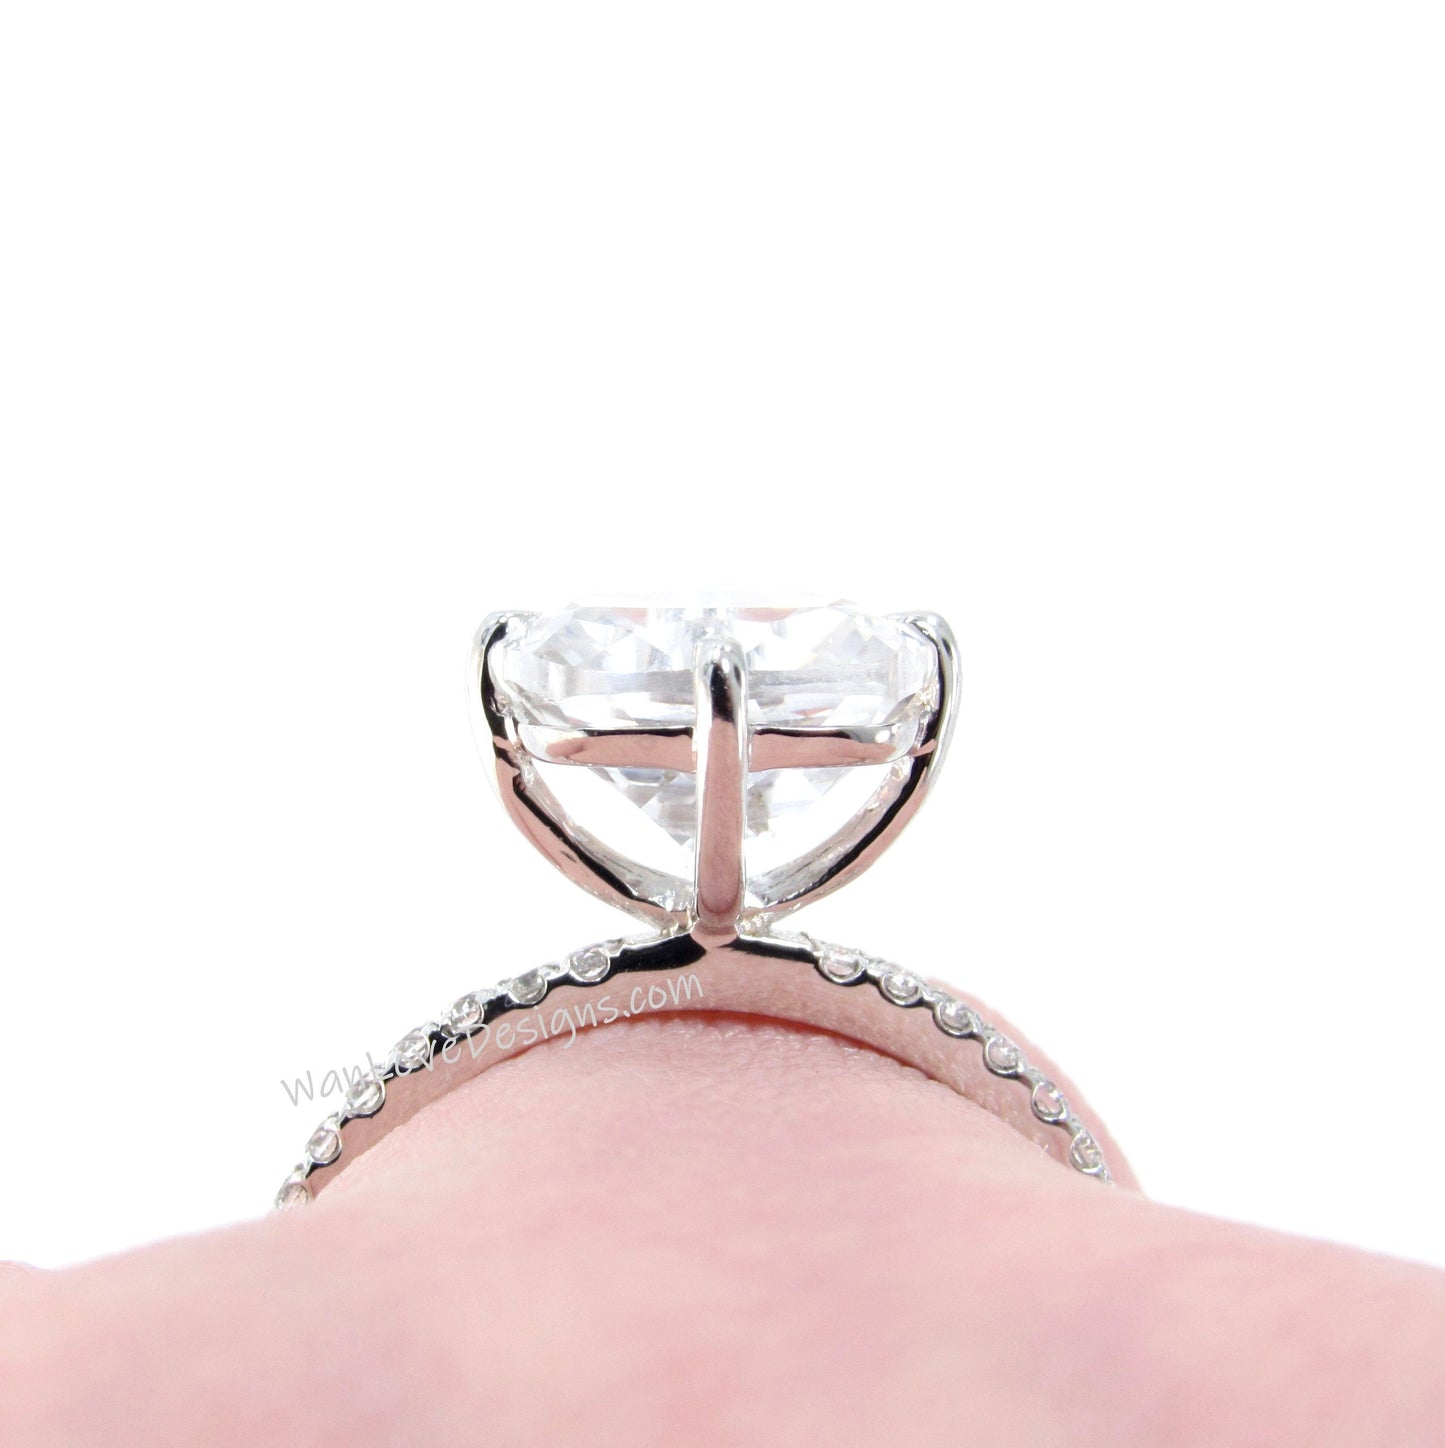 White Sapphire & Diamond Elongated Cushion Engagement Ring, Celebrity, Custom-14kt 18kt Gold-Platinum-Wedding, WanLoveDesigns